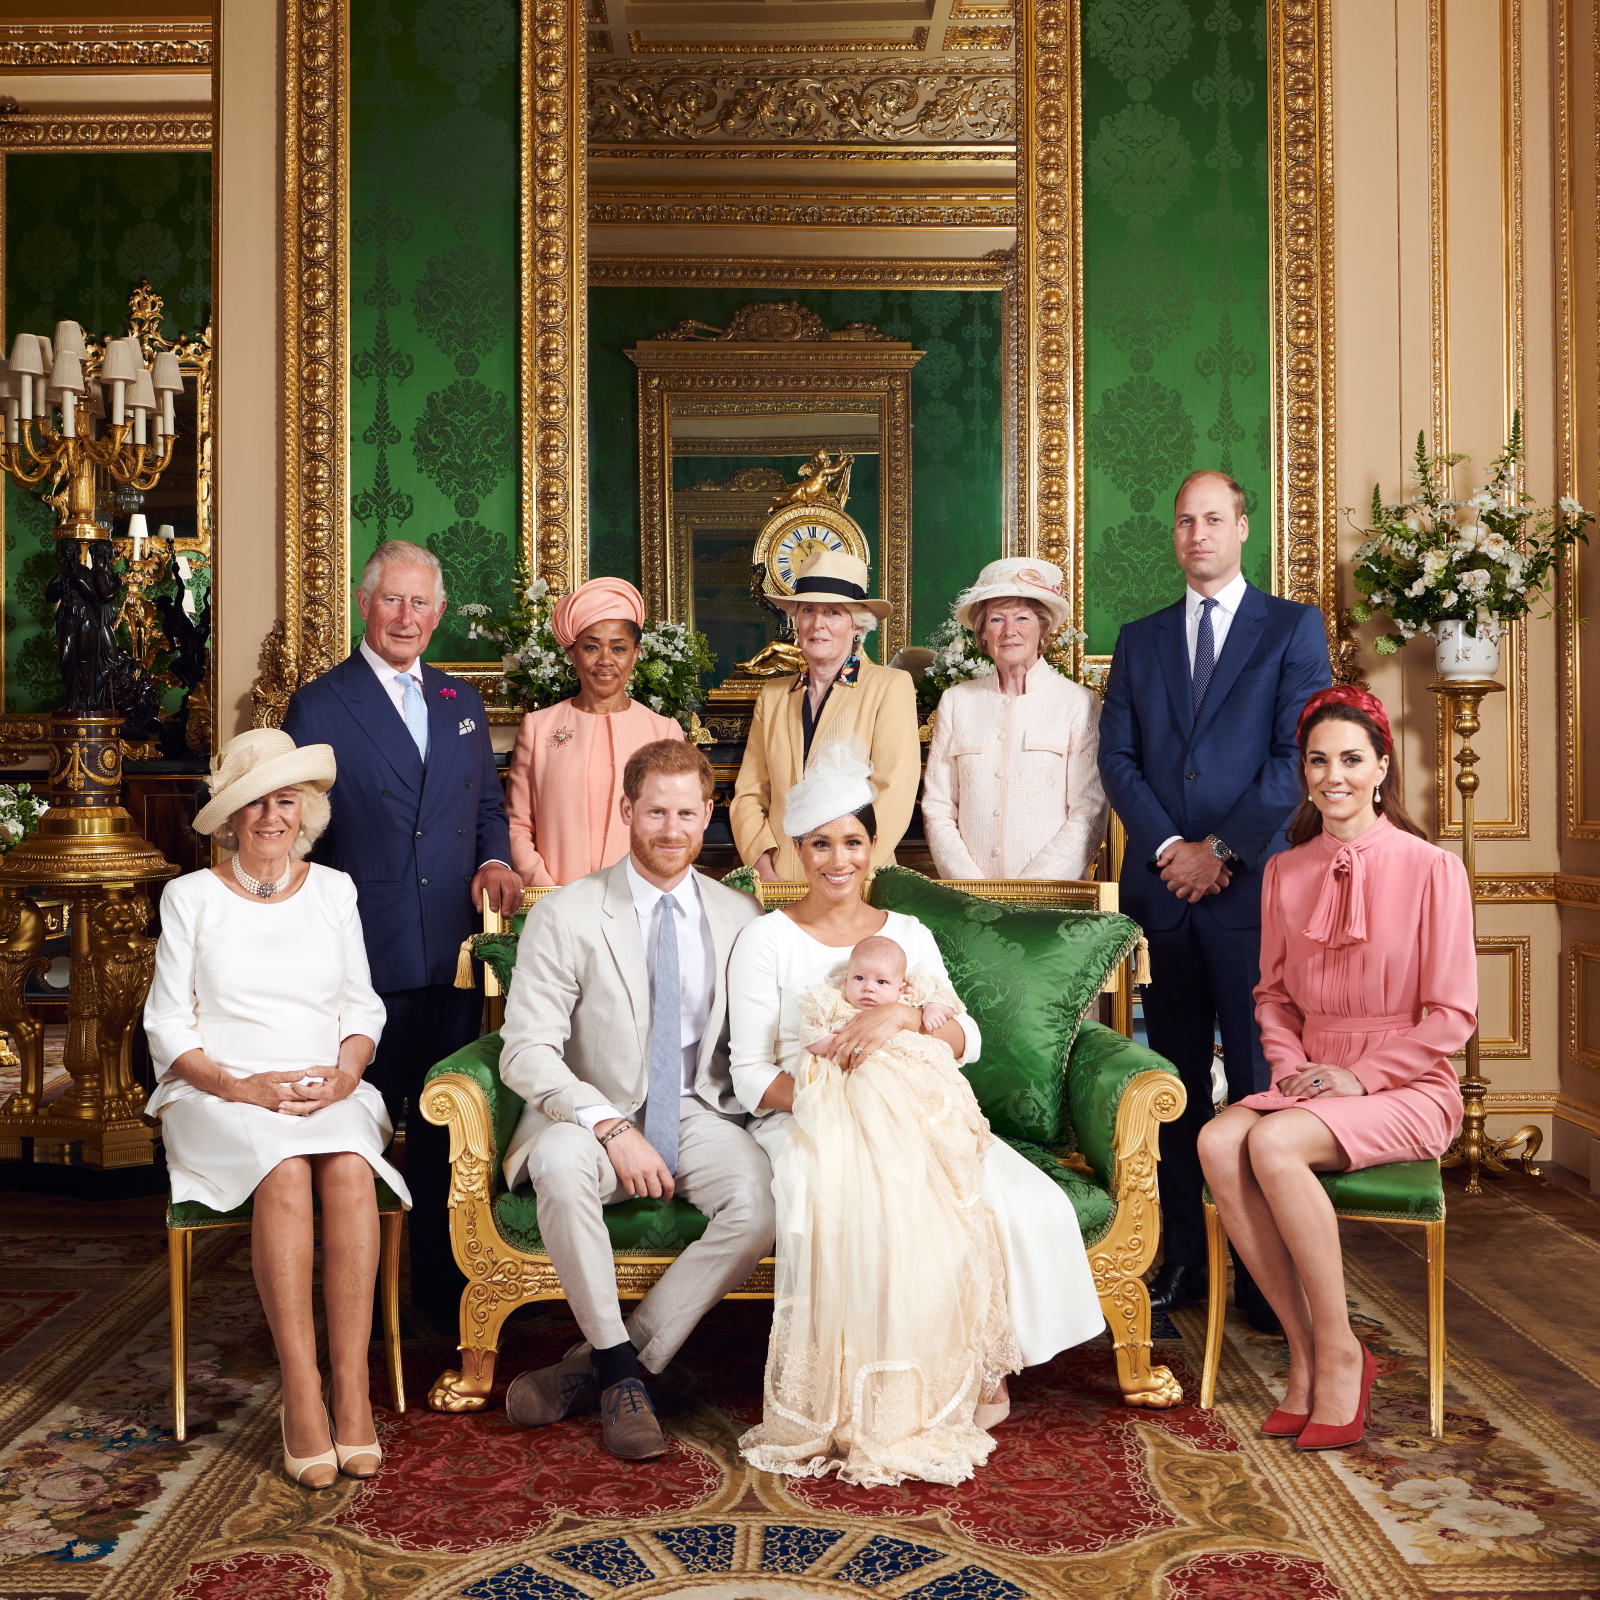 Rodzina Królewska fot. EPA/CHRIS ALLERTON